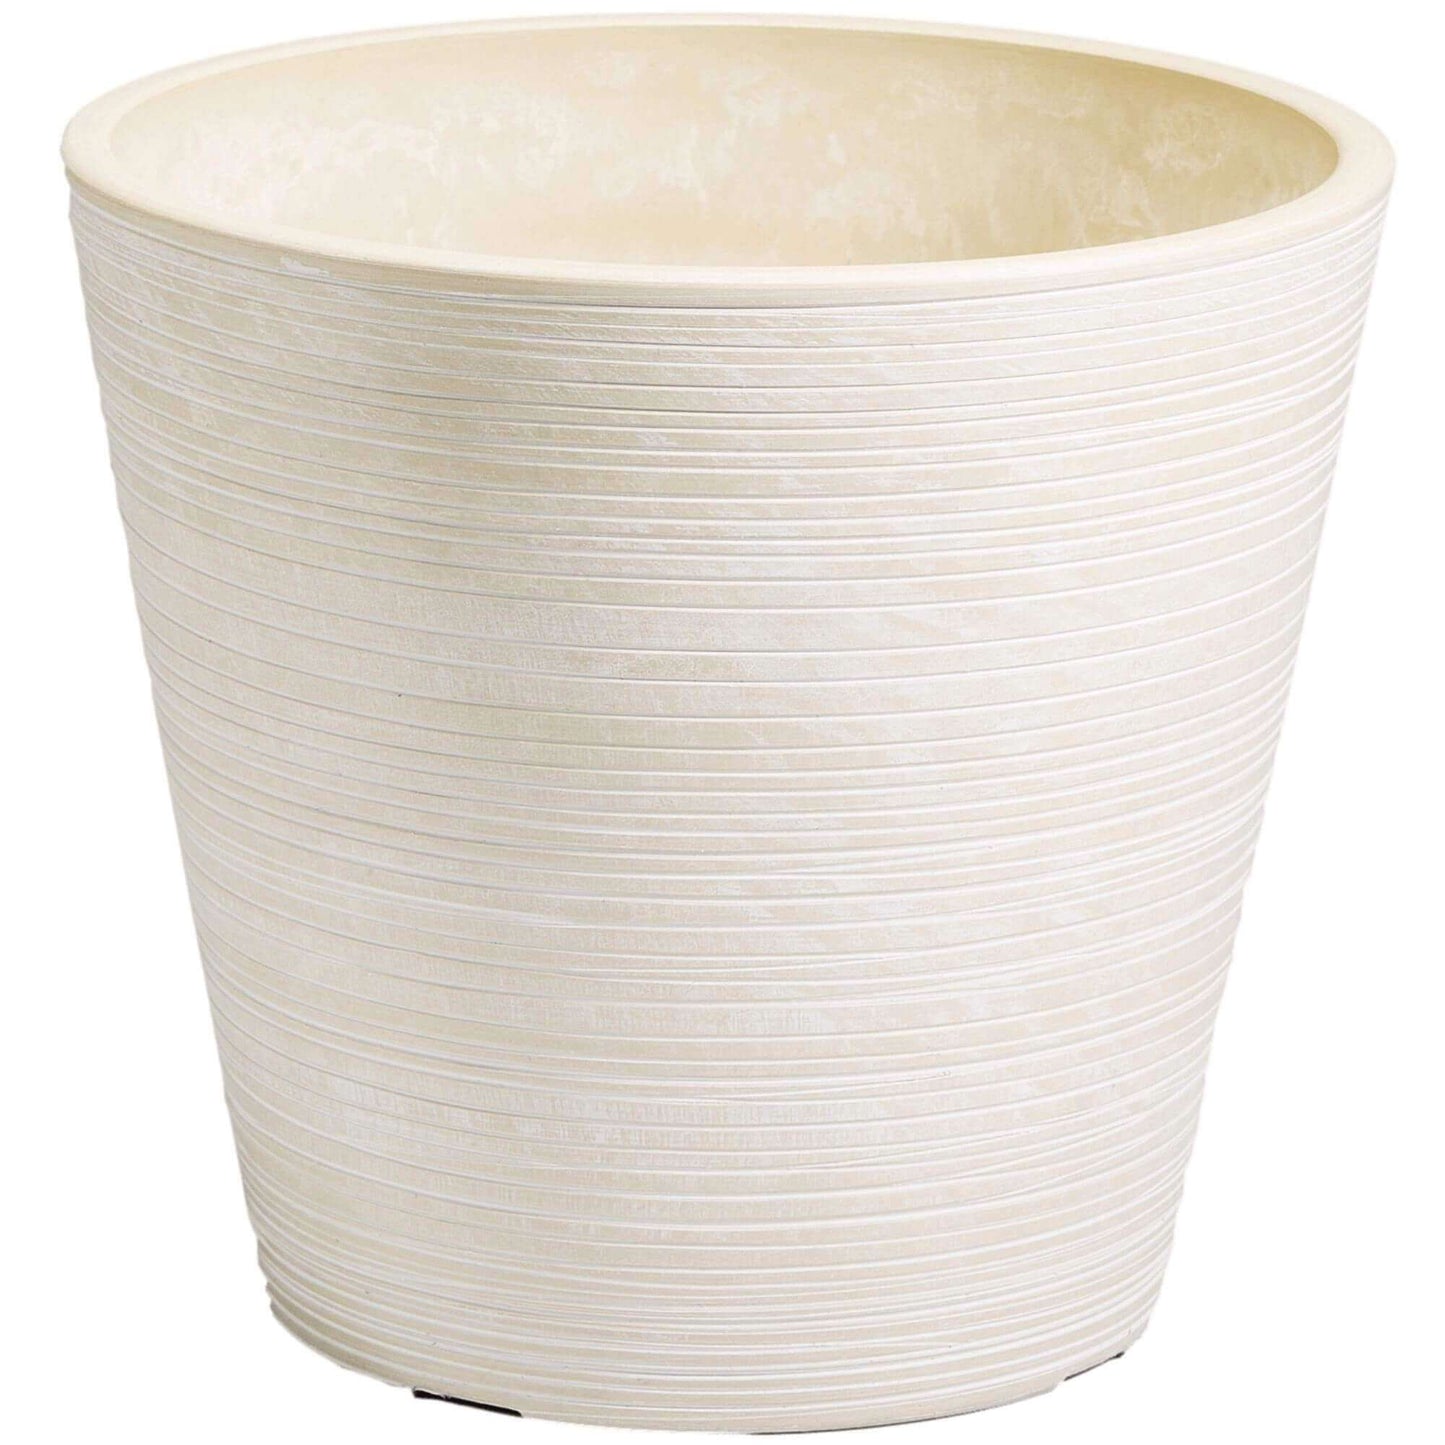 Cream and White Engraved Pot (14cm)